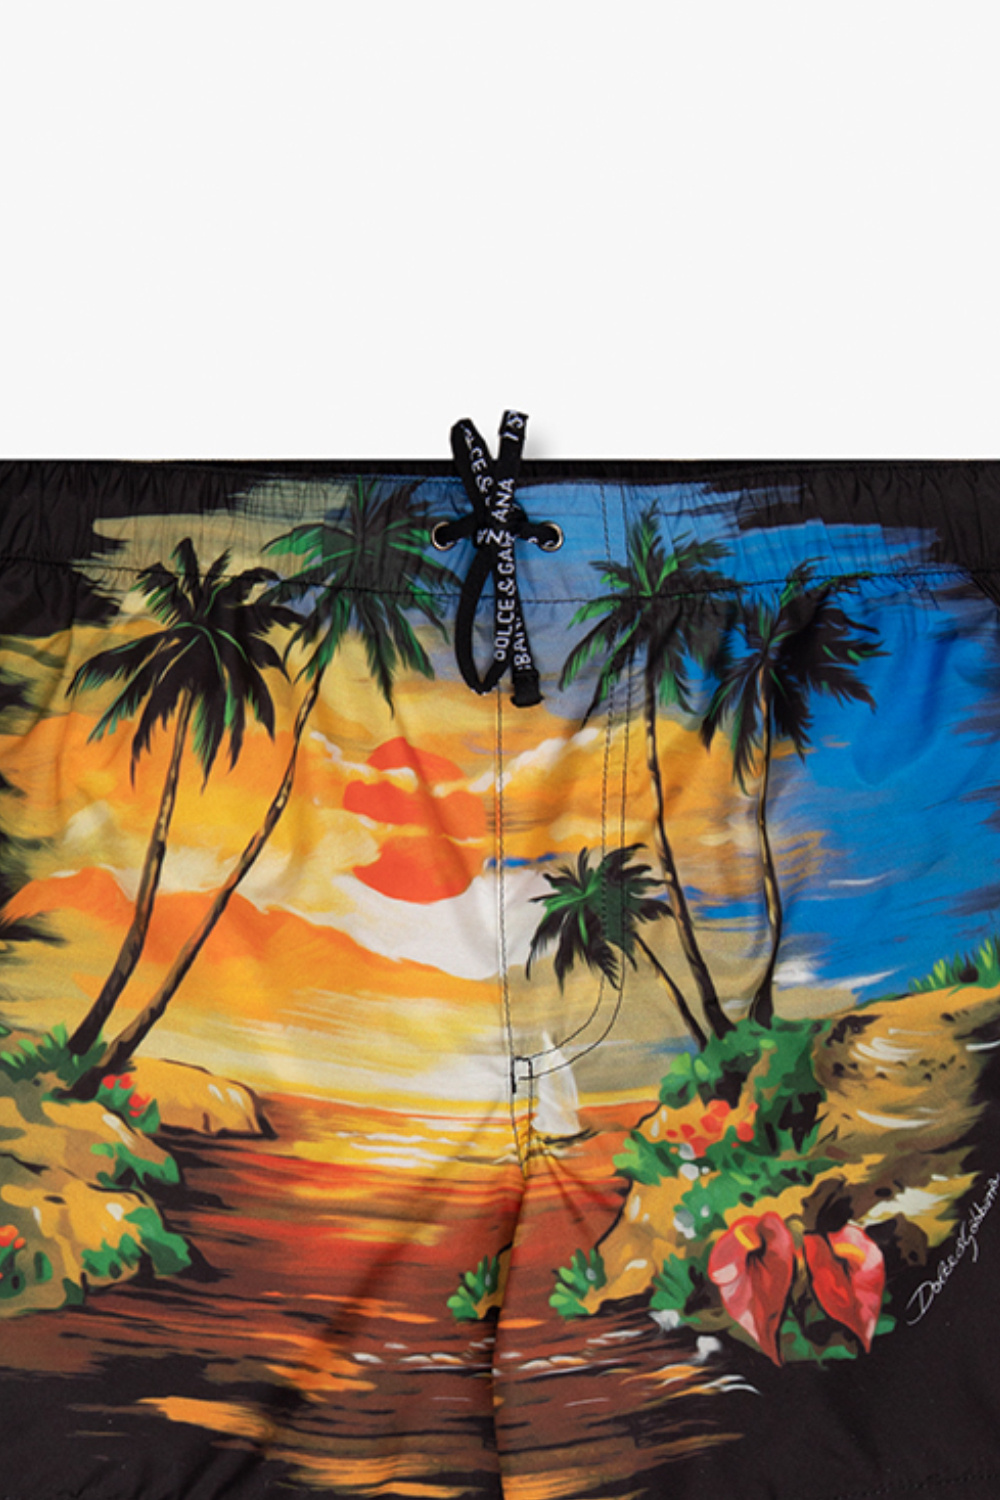 Dolce & Gabbana Kids tropical rose print sneakers Patterned swim shorts